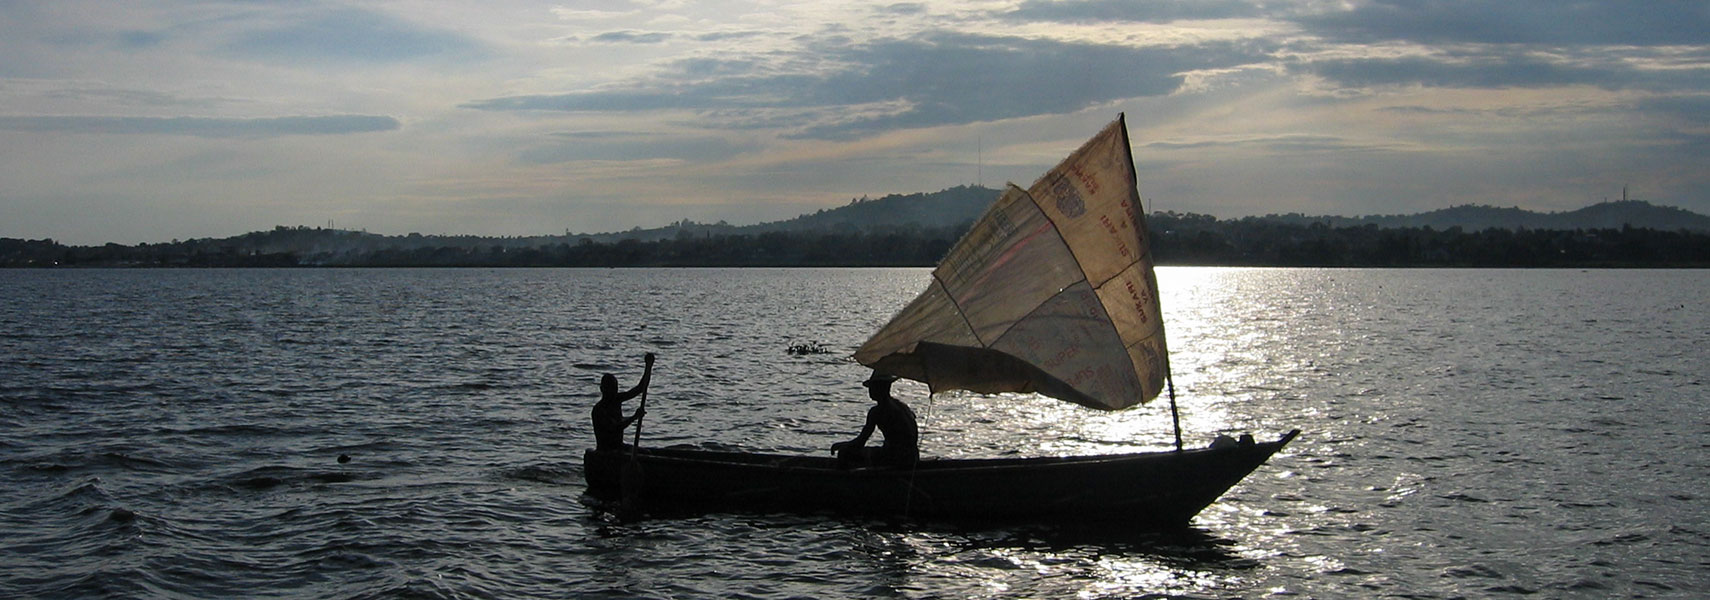 Fishermen boat on Lake Victoria, Uganda